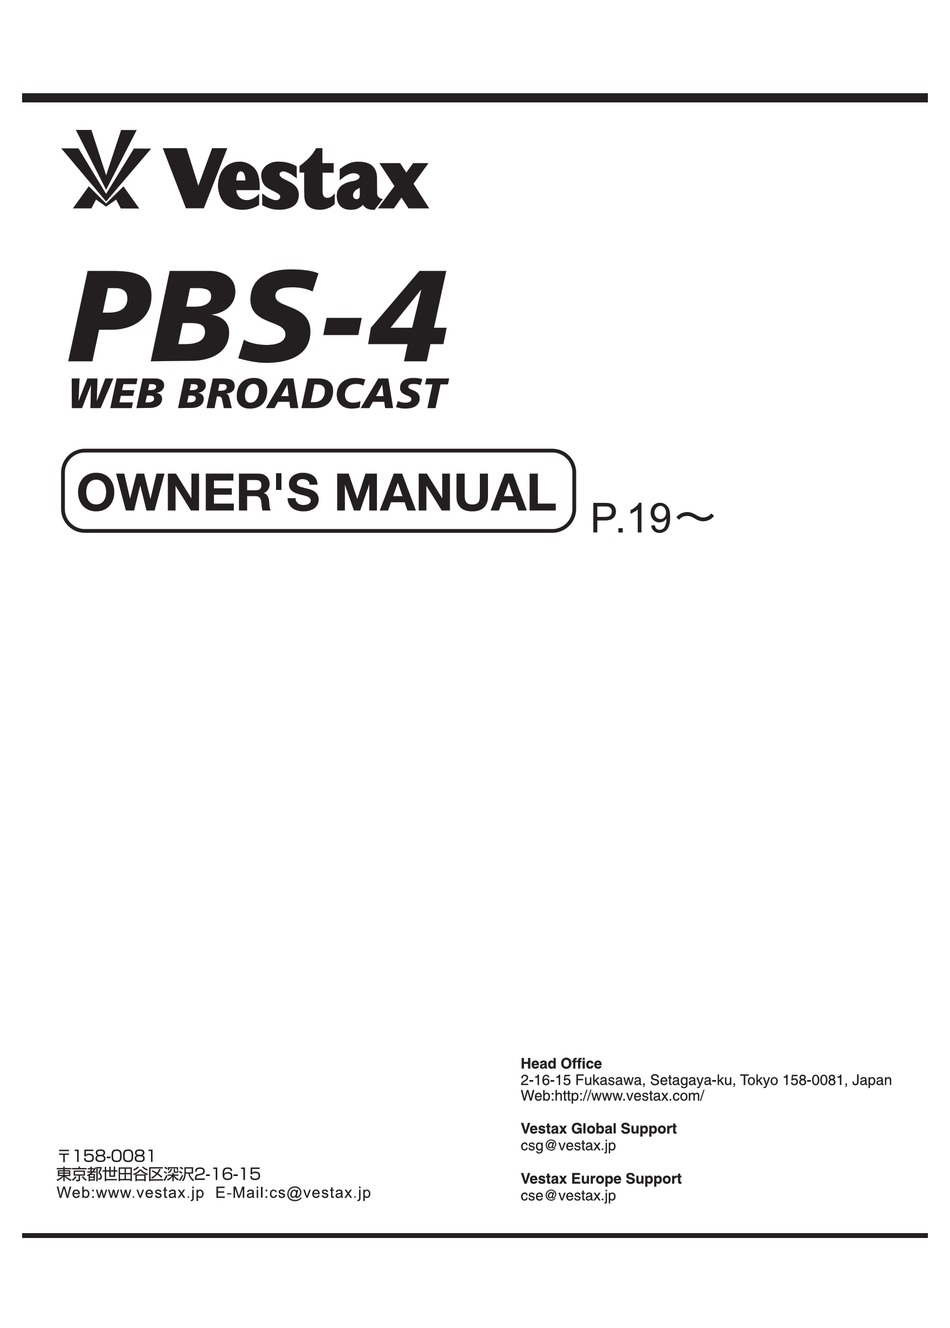 VESTAX PBS-4 OWNER'S MANUAL Pdf Download | ManualsLib